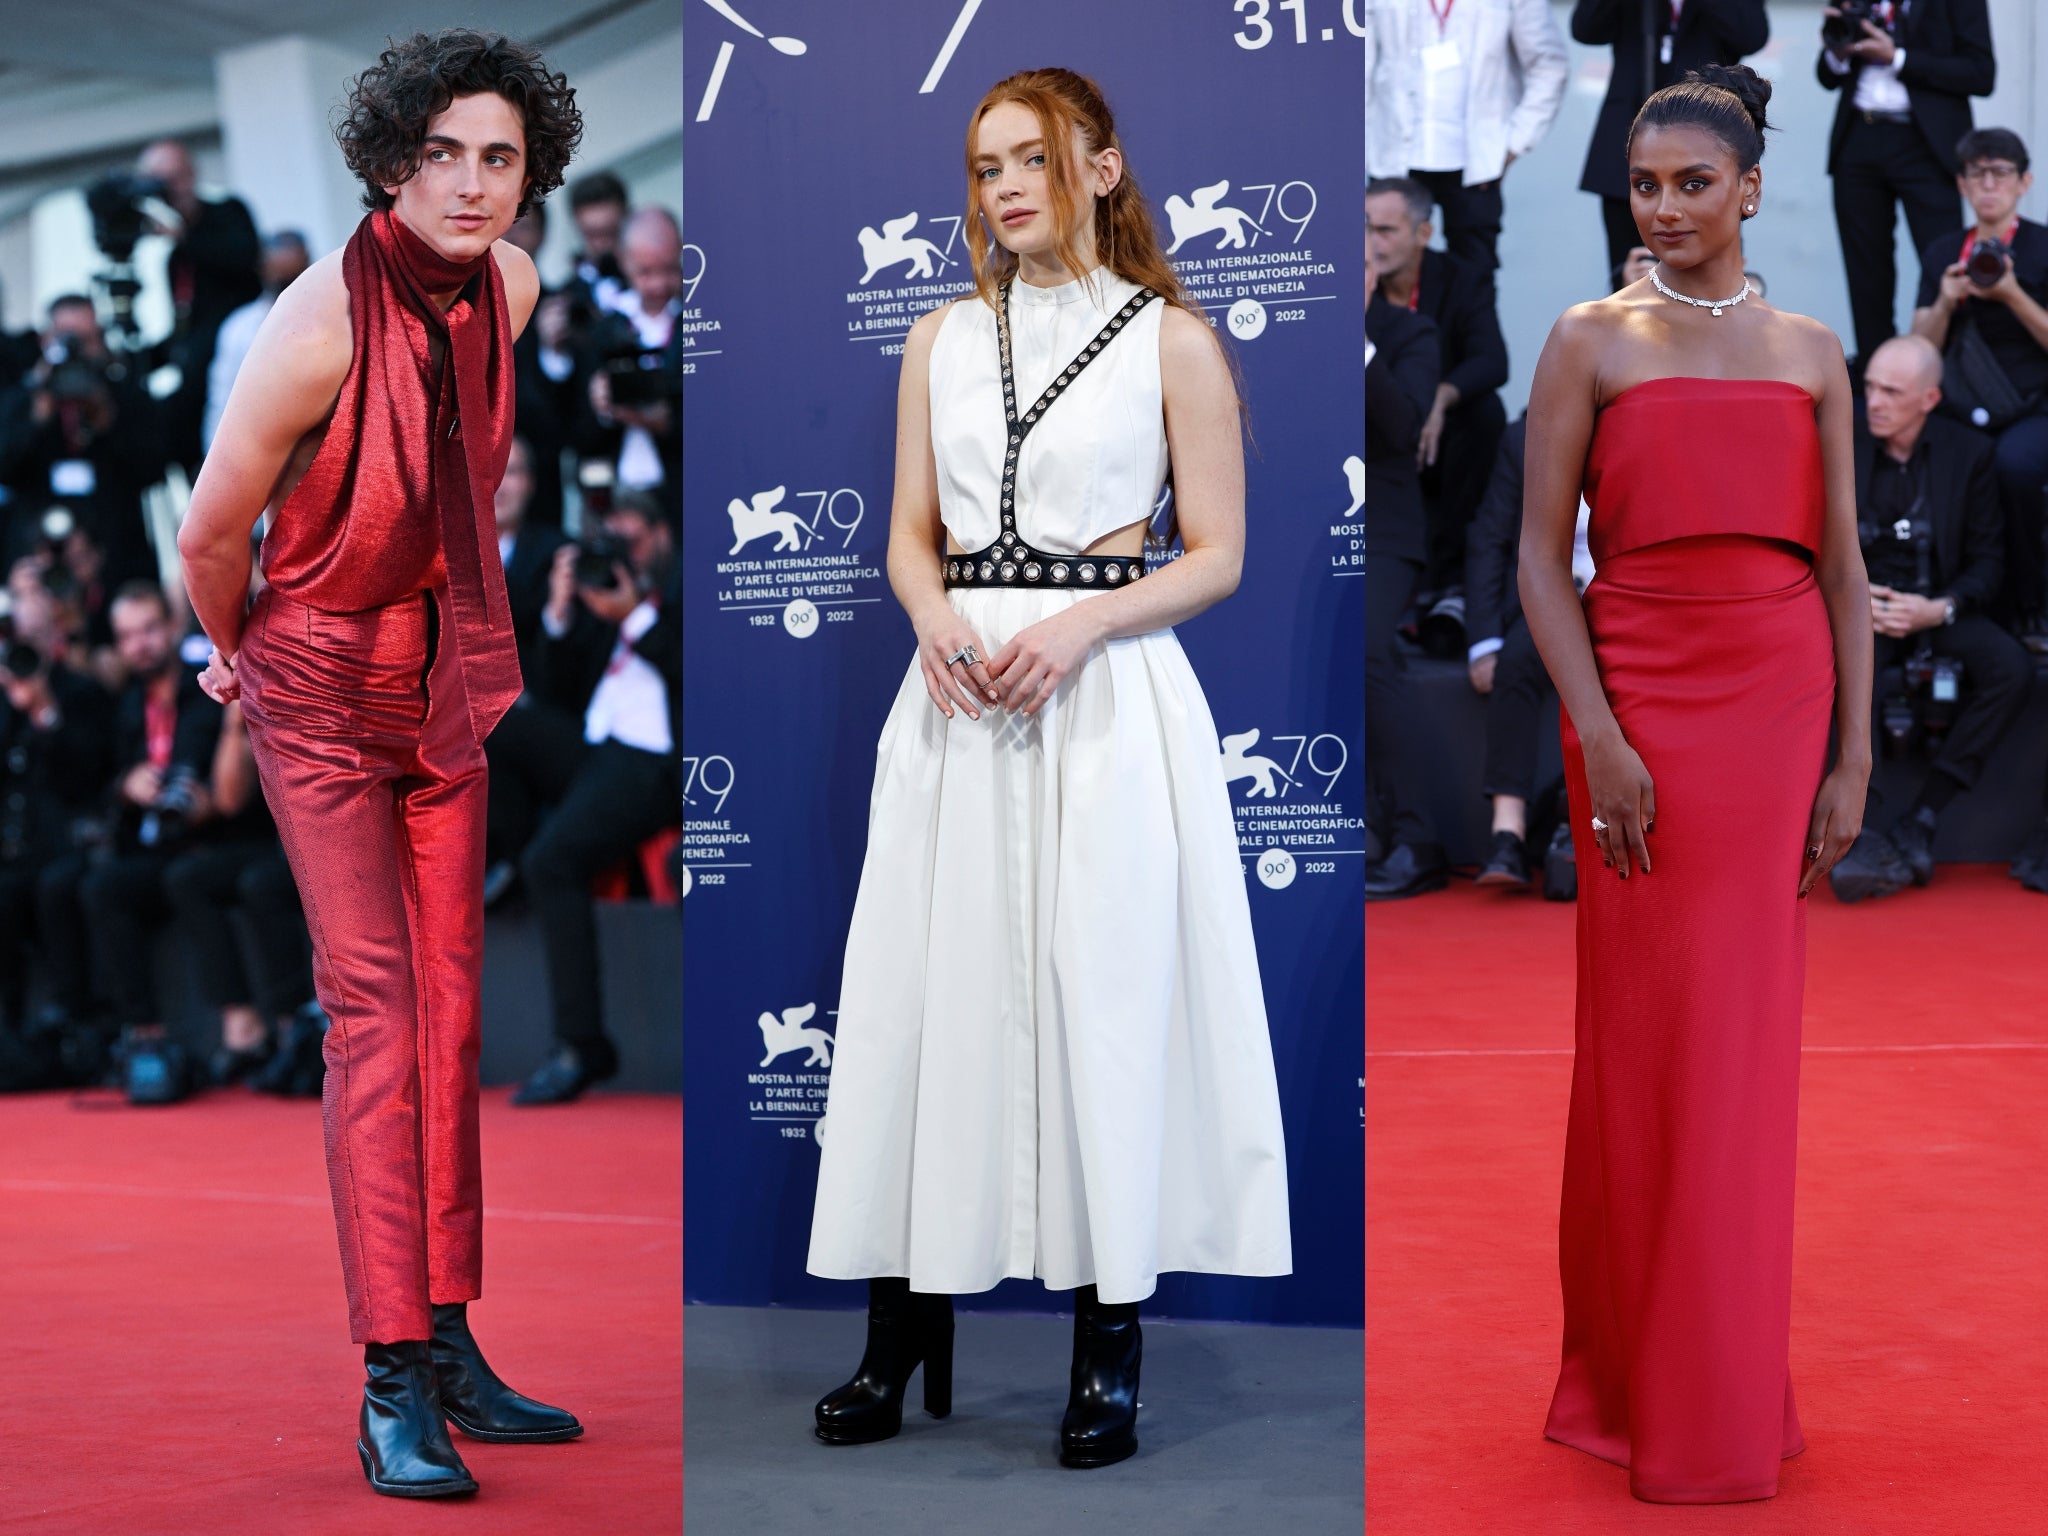 Timothée Chalamet Wears Backless Look at Venice Film Festival